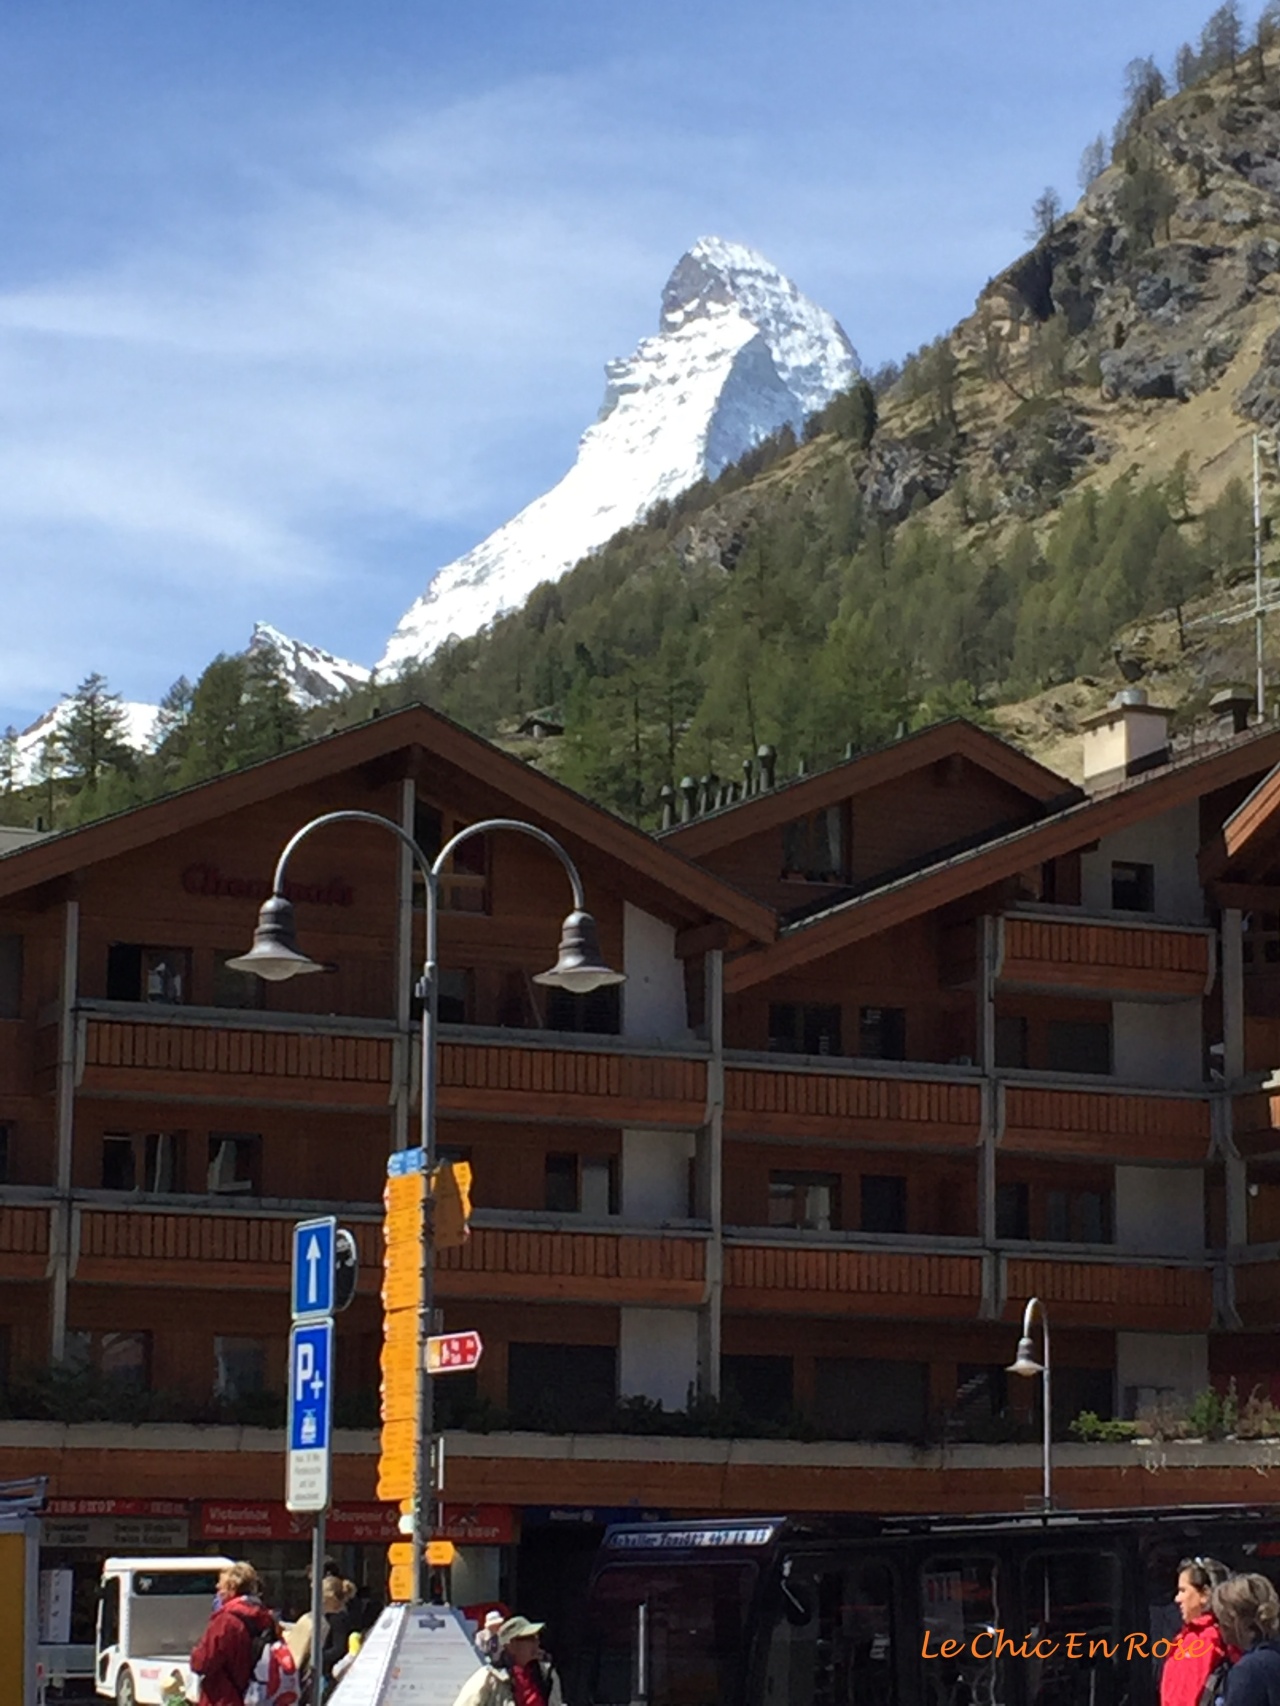 Arriving at Zermatt - Matterhorn in background